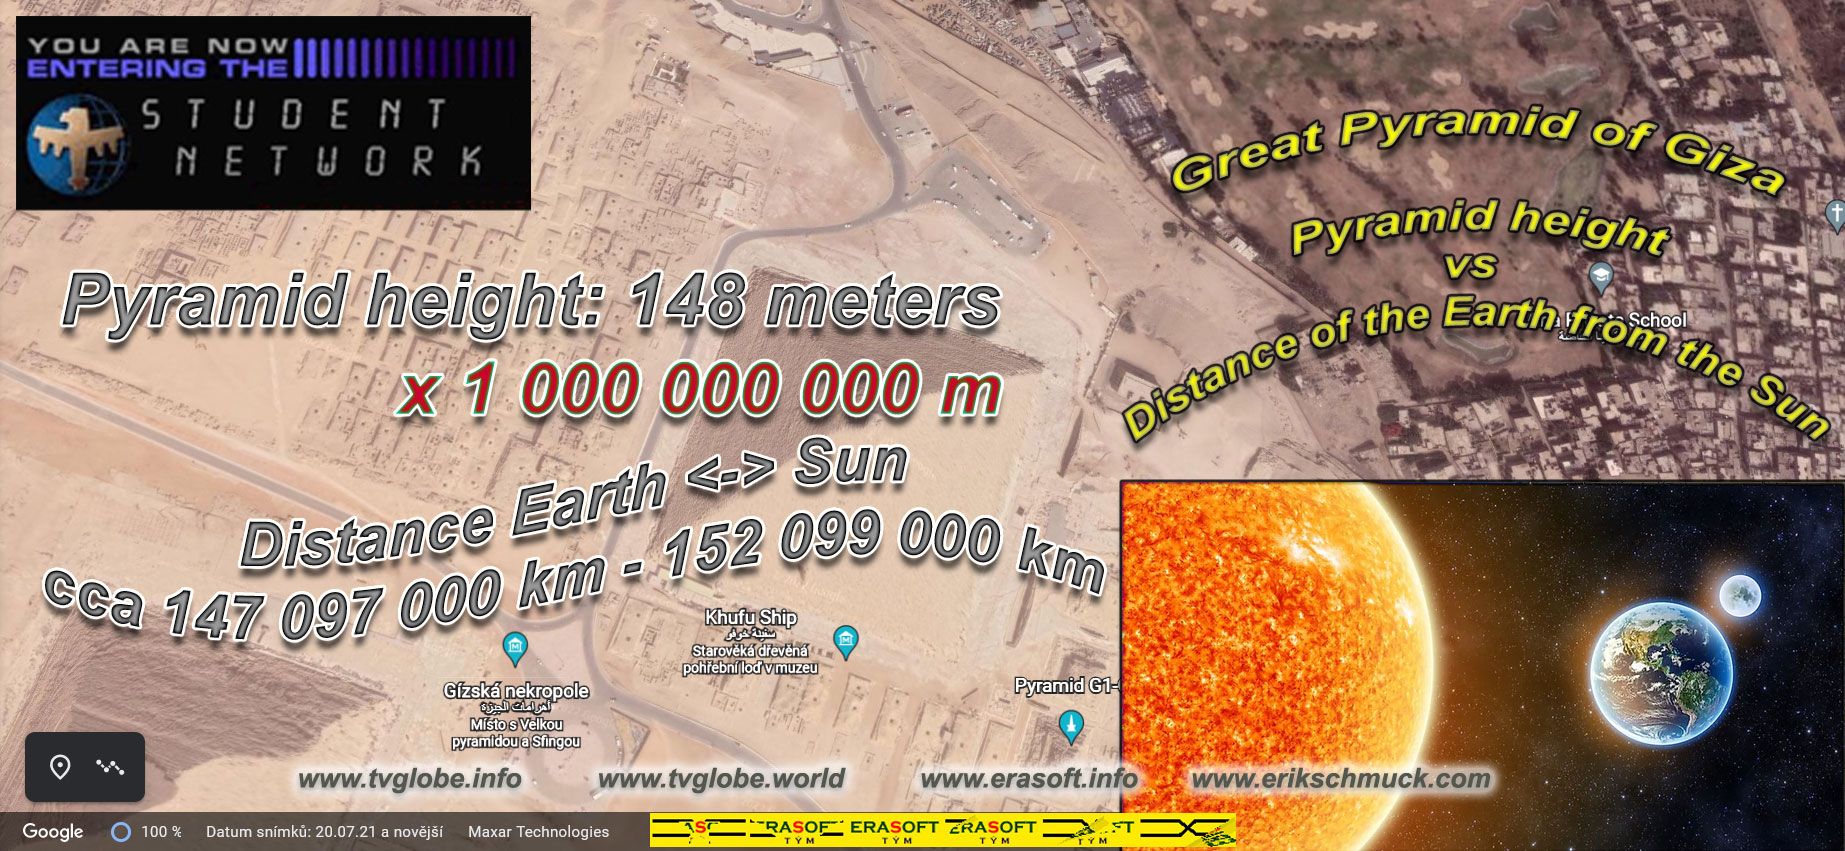 Great Pyramid of Giza - Výška pyramidy vs vzdálenost Země od Slunce - Pyramid height vs Distance of the Earth from the Sun - Erik Schmuck DiS.